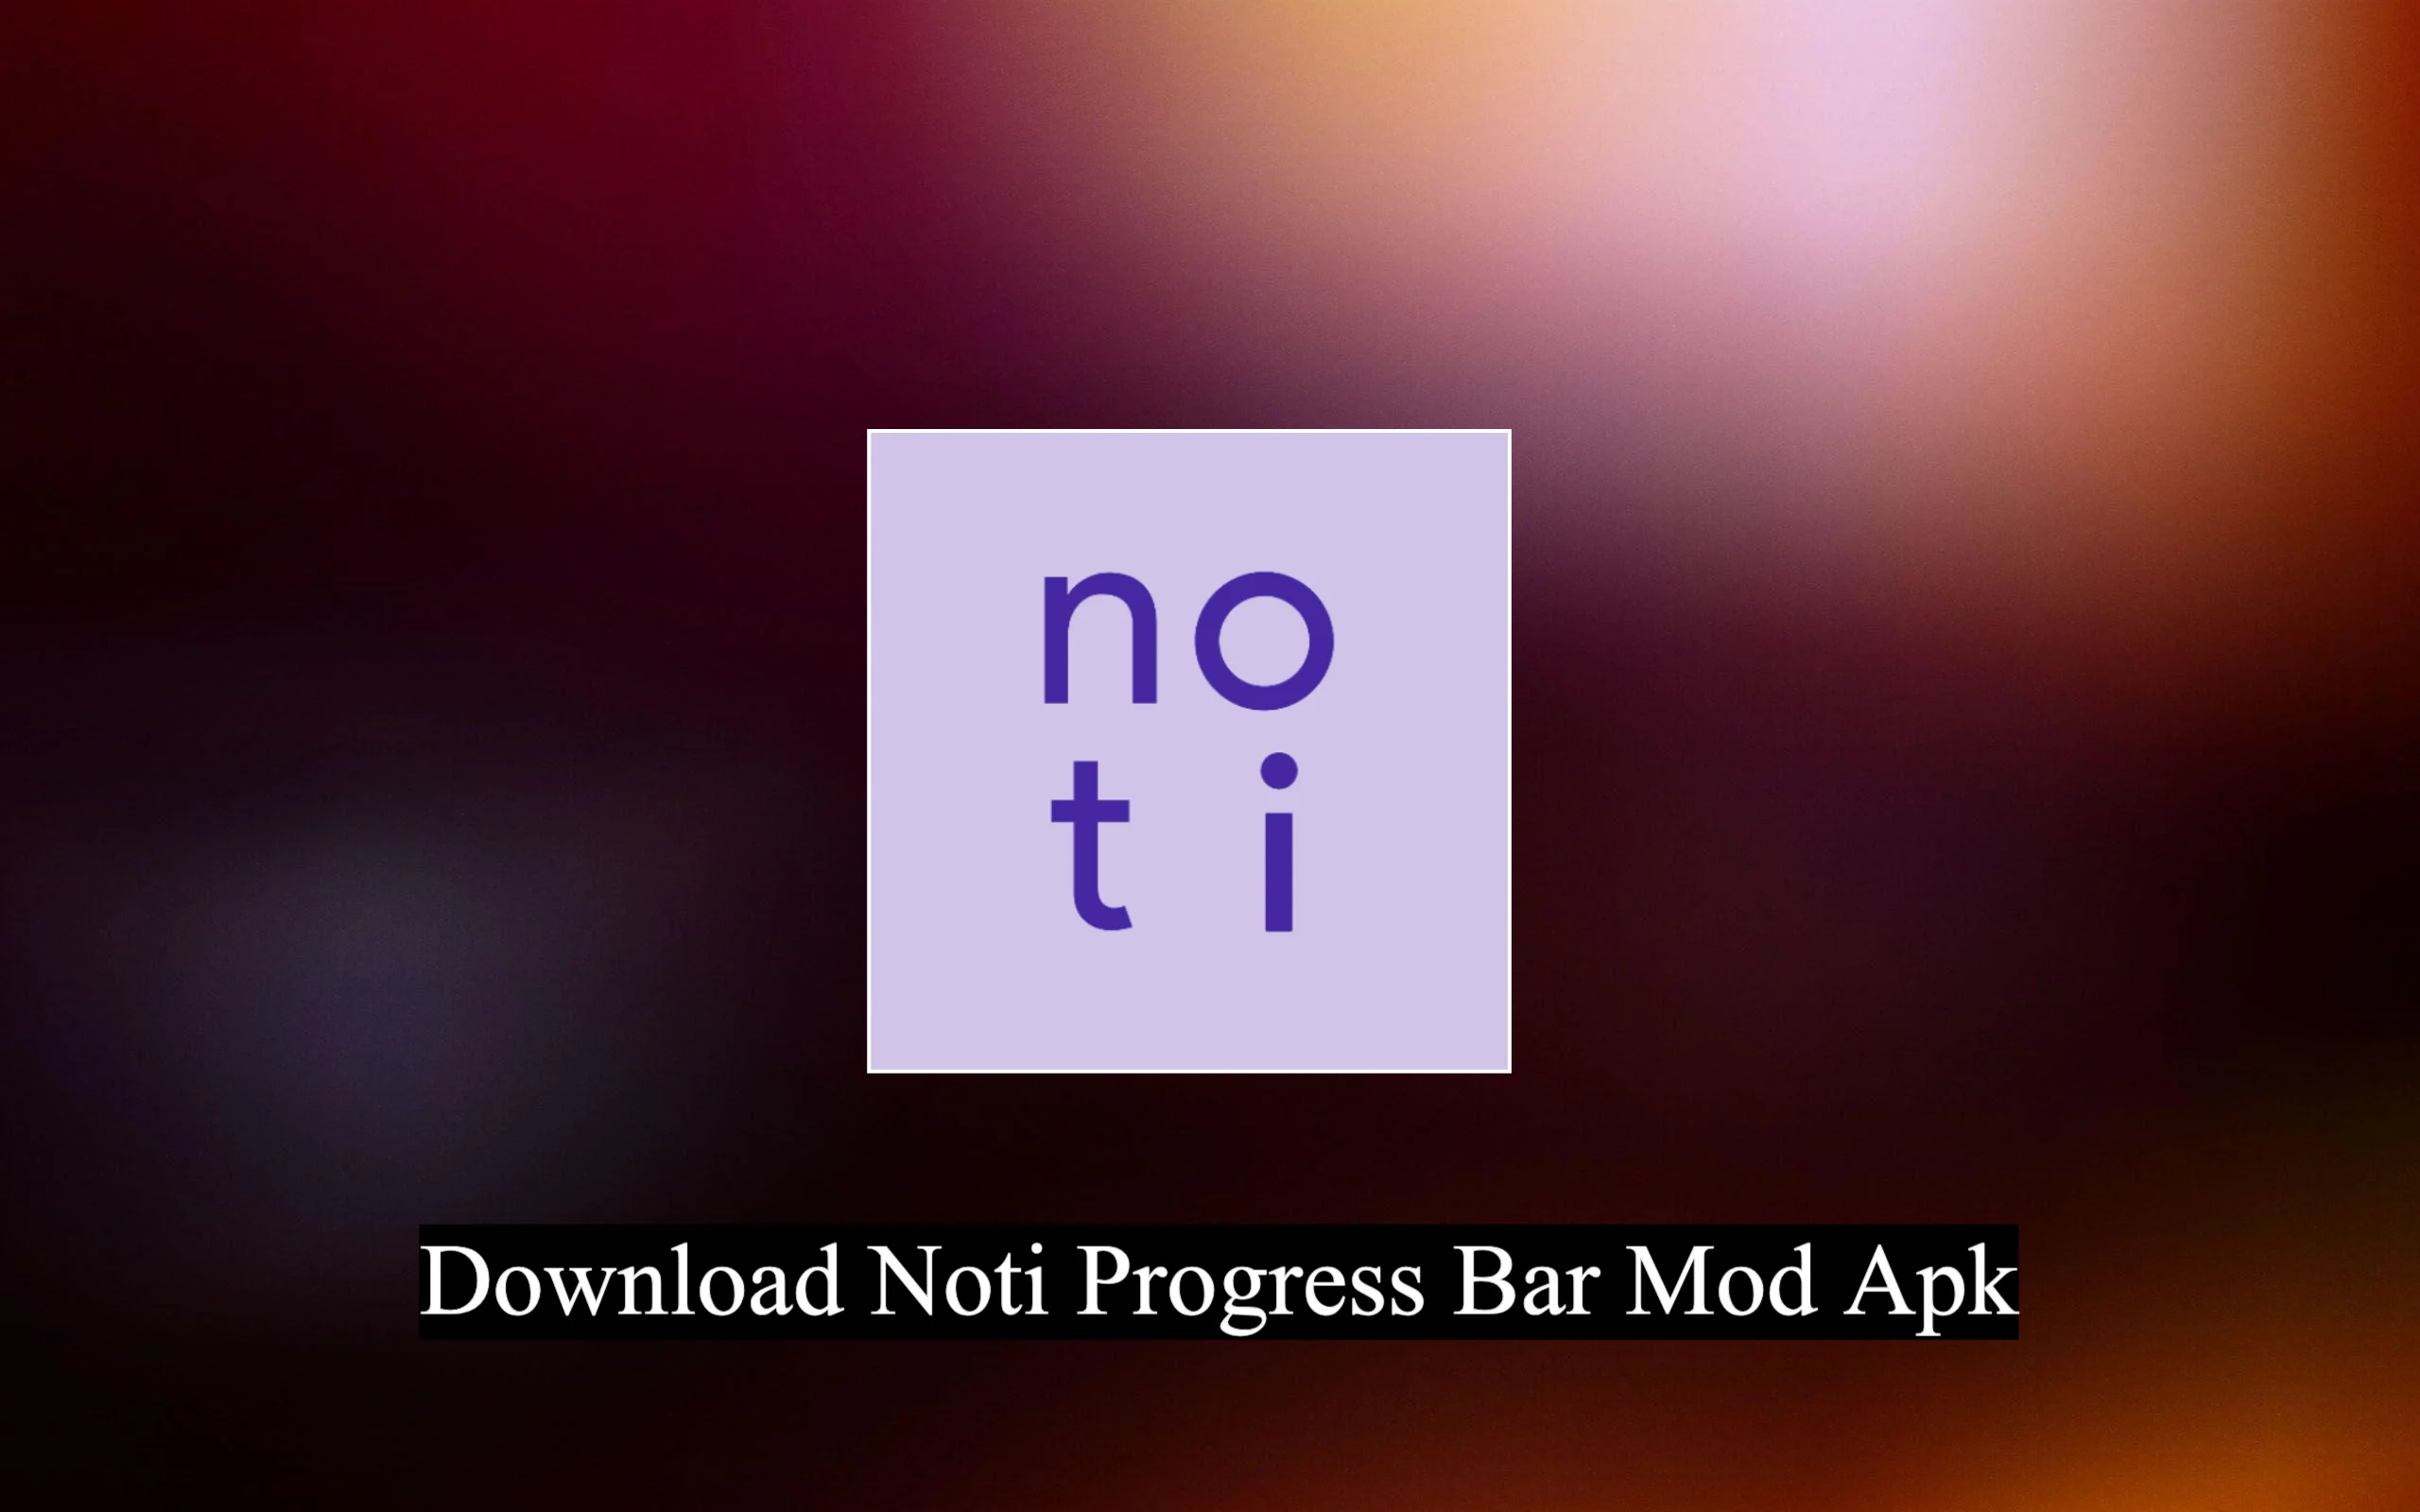 wp2051132 11 - Dowload Noti Progress Bar Mod Apk v1.9 (Premium Unlocked)